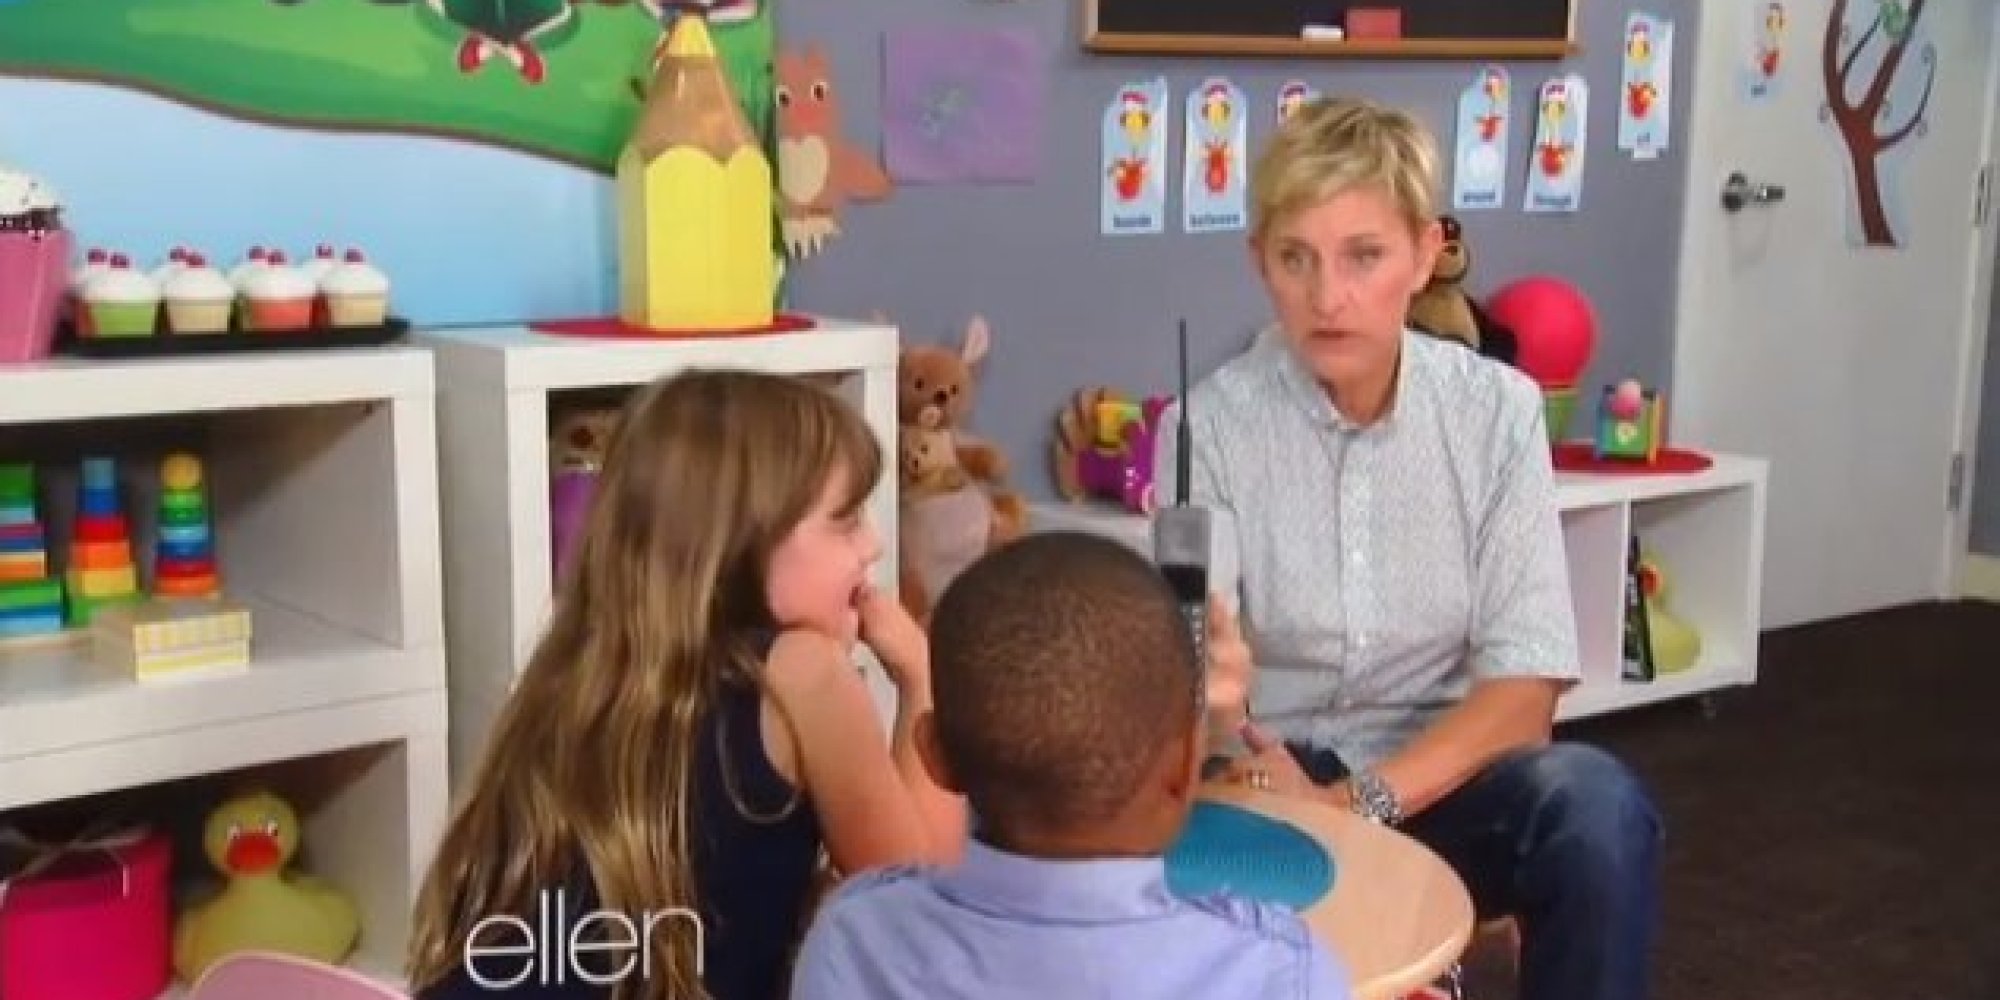 Ellen Degeneres Shows Kids Outdated Technology, Unsurprising Confusion